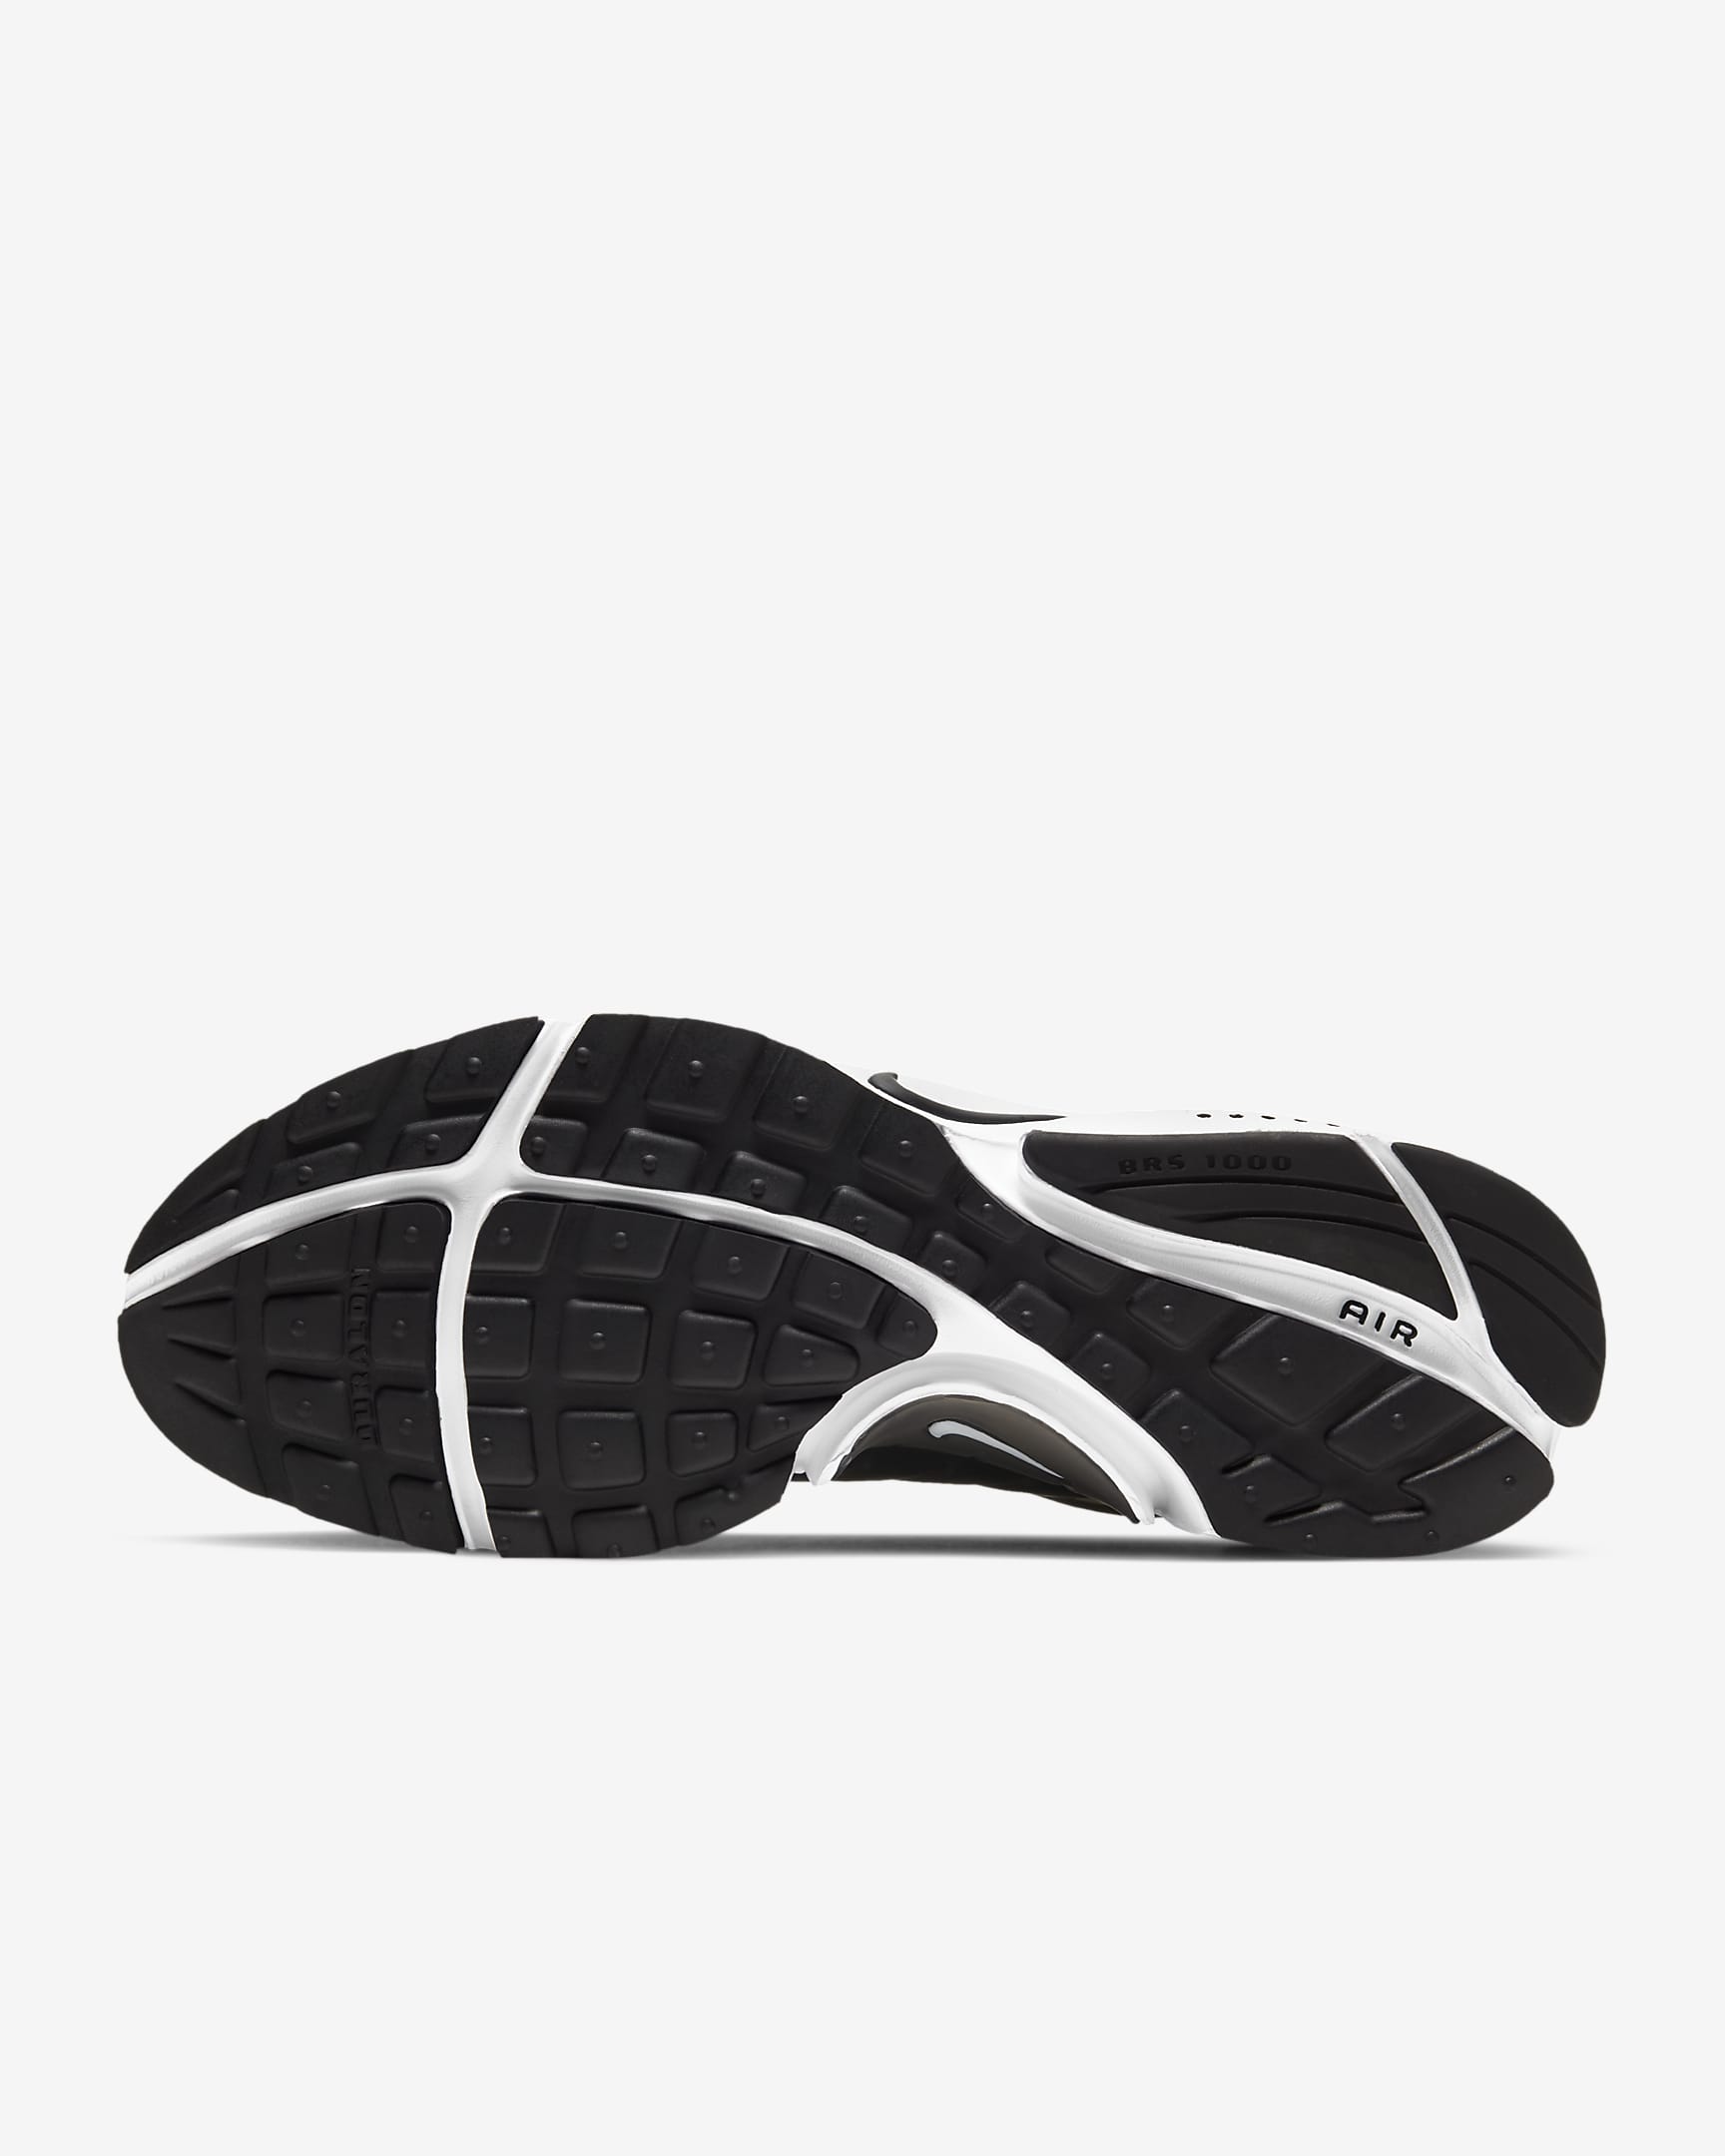 Scarpa Nike Air Presto - Uomo - Nero/Bianco/Nero